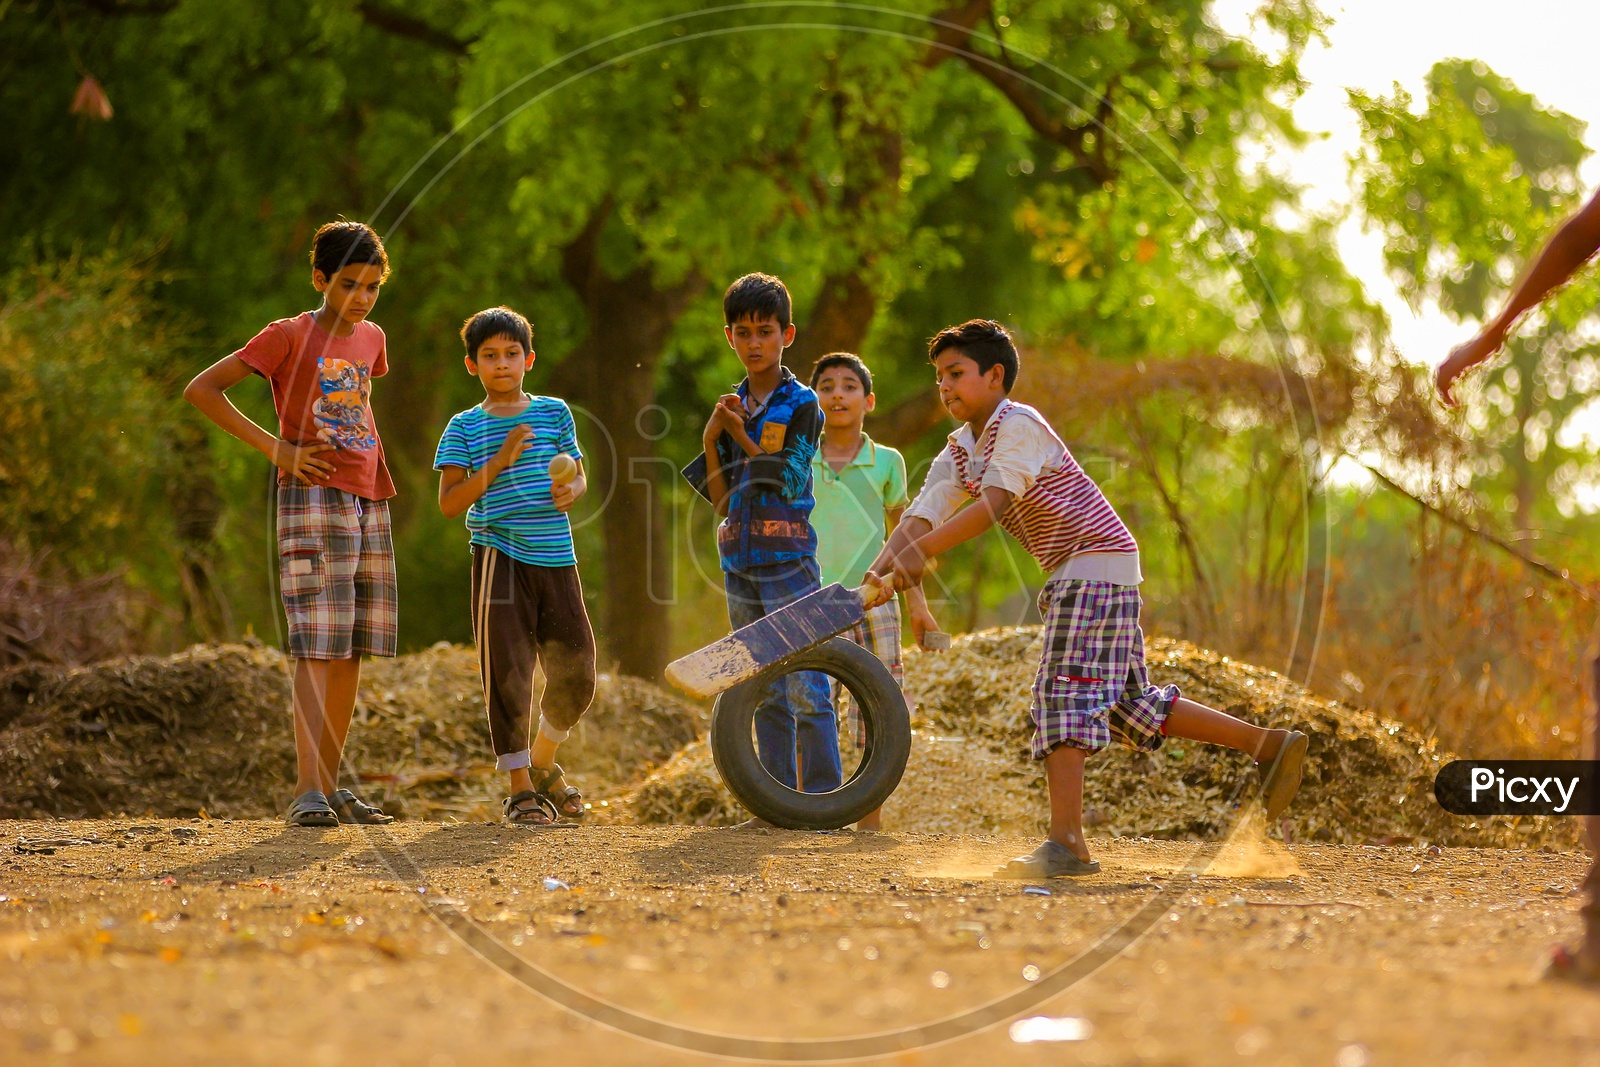 Indian Rural Village Kids Playing Cricket In Fields